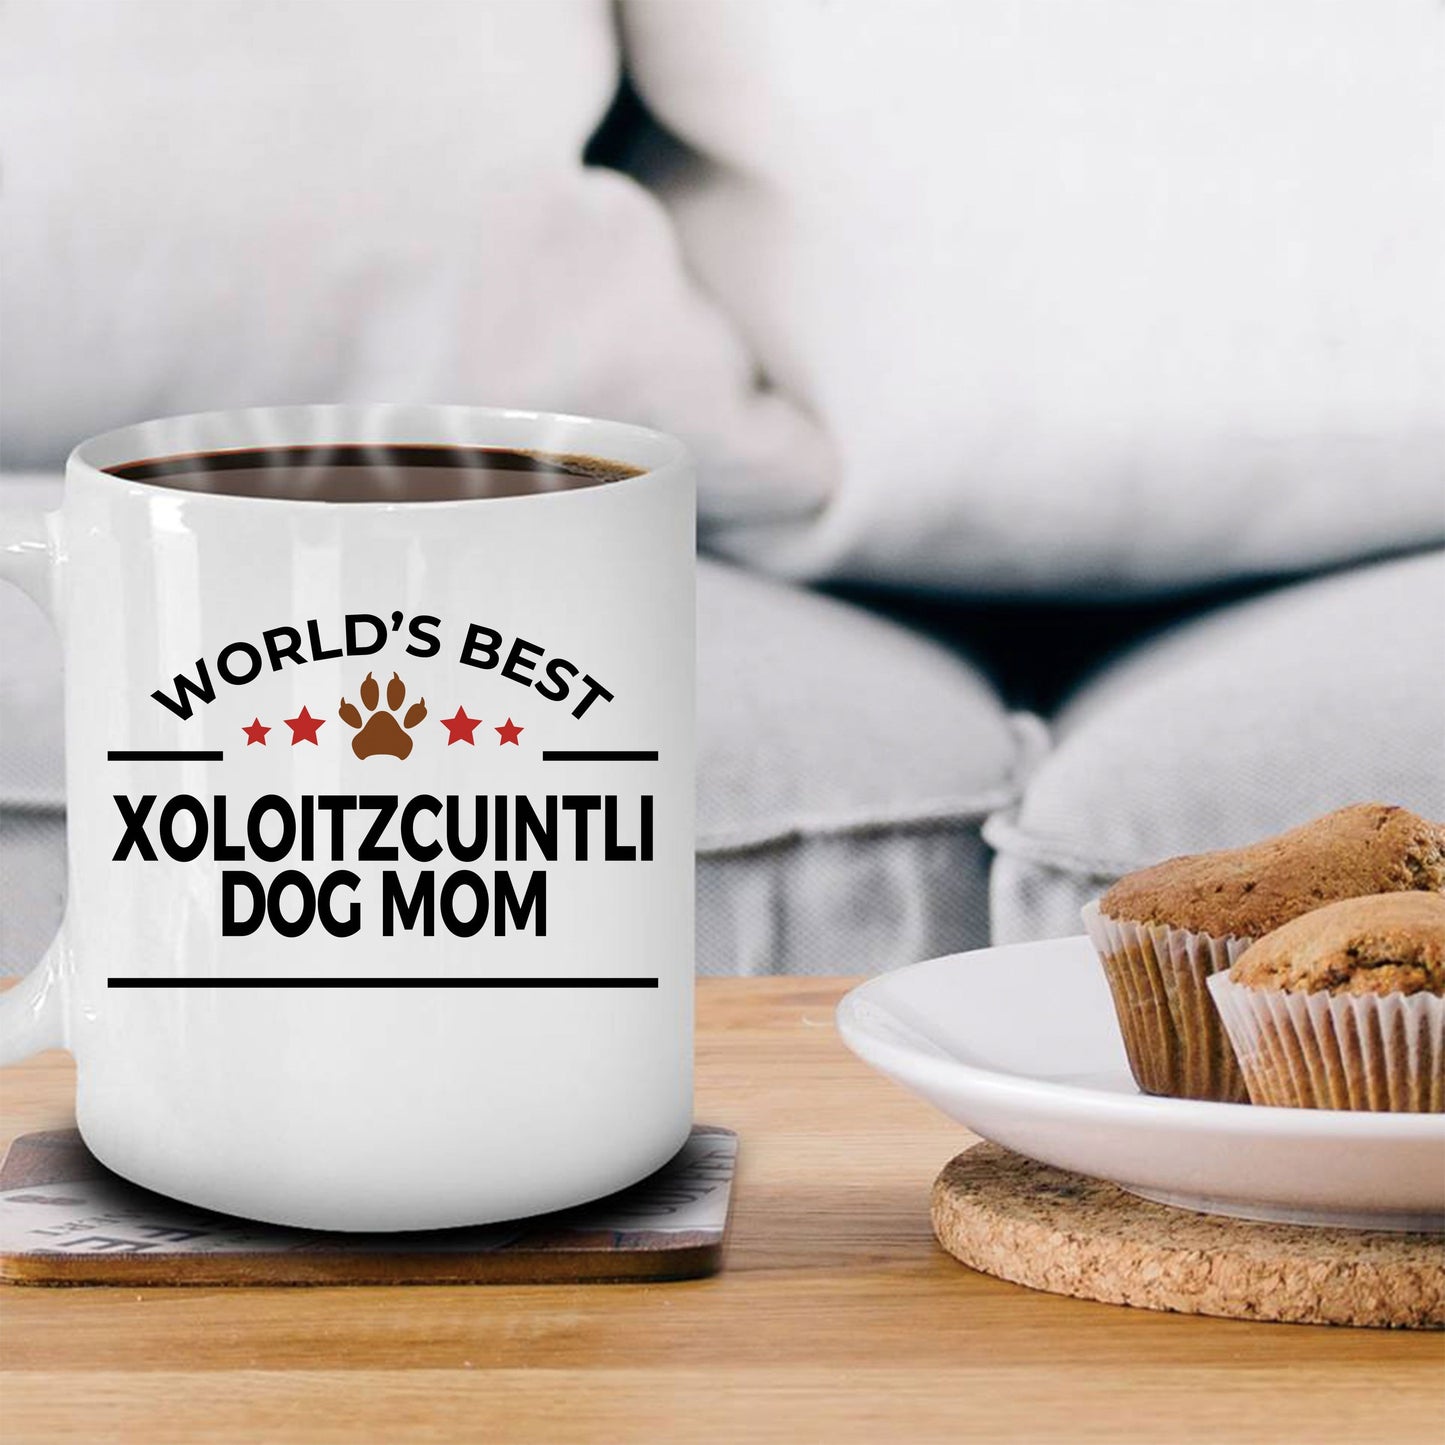 Xoloitzcuintli Best Dog Mom Coffee Mug